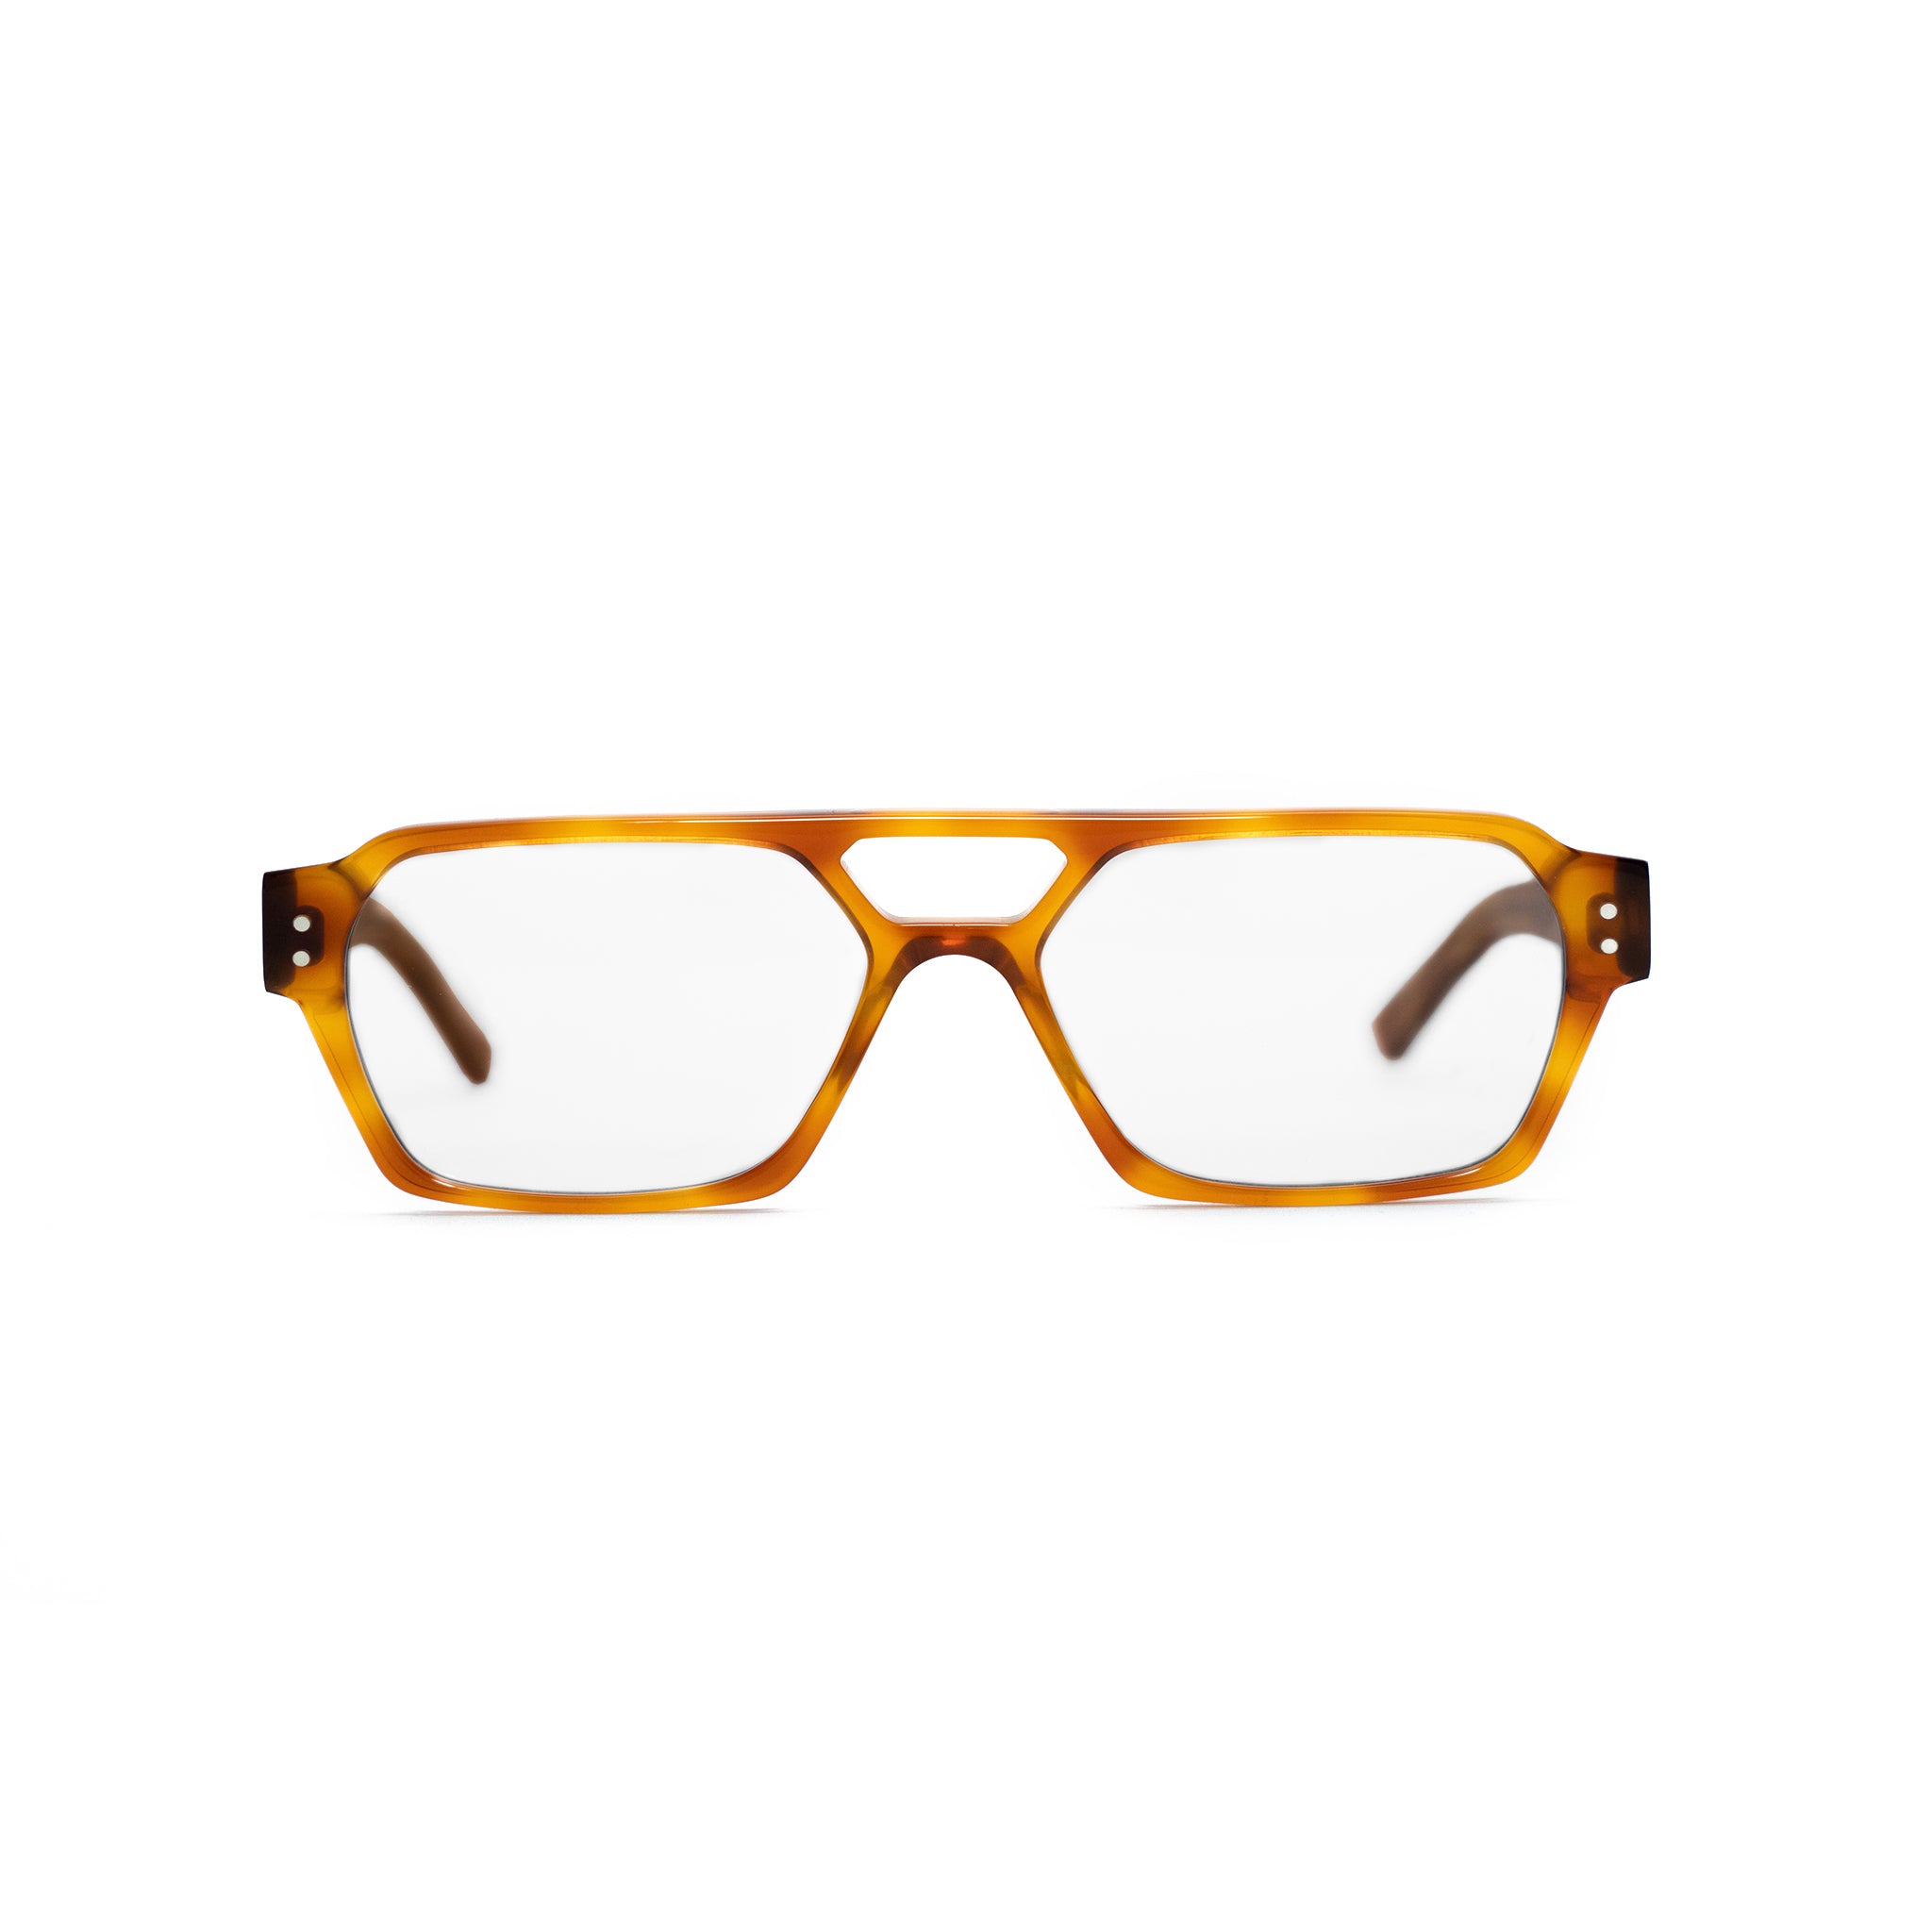 Ego optical glasses in tortoise from Ameos Eyewear.